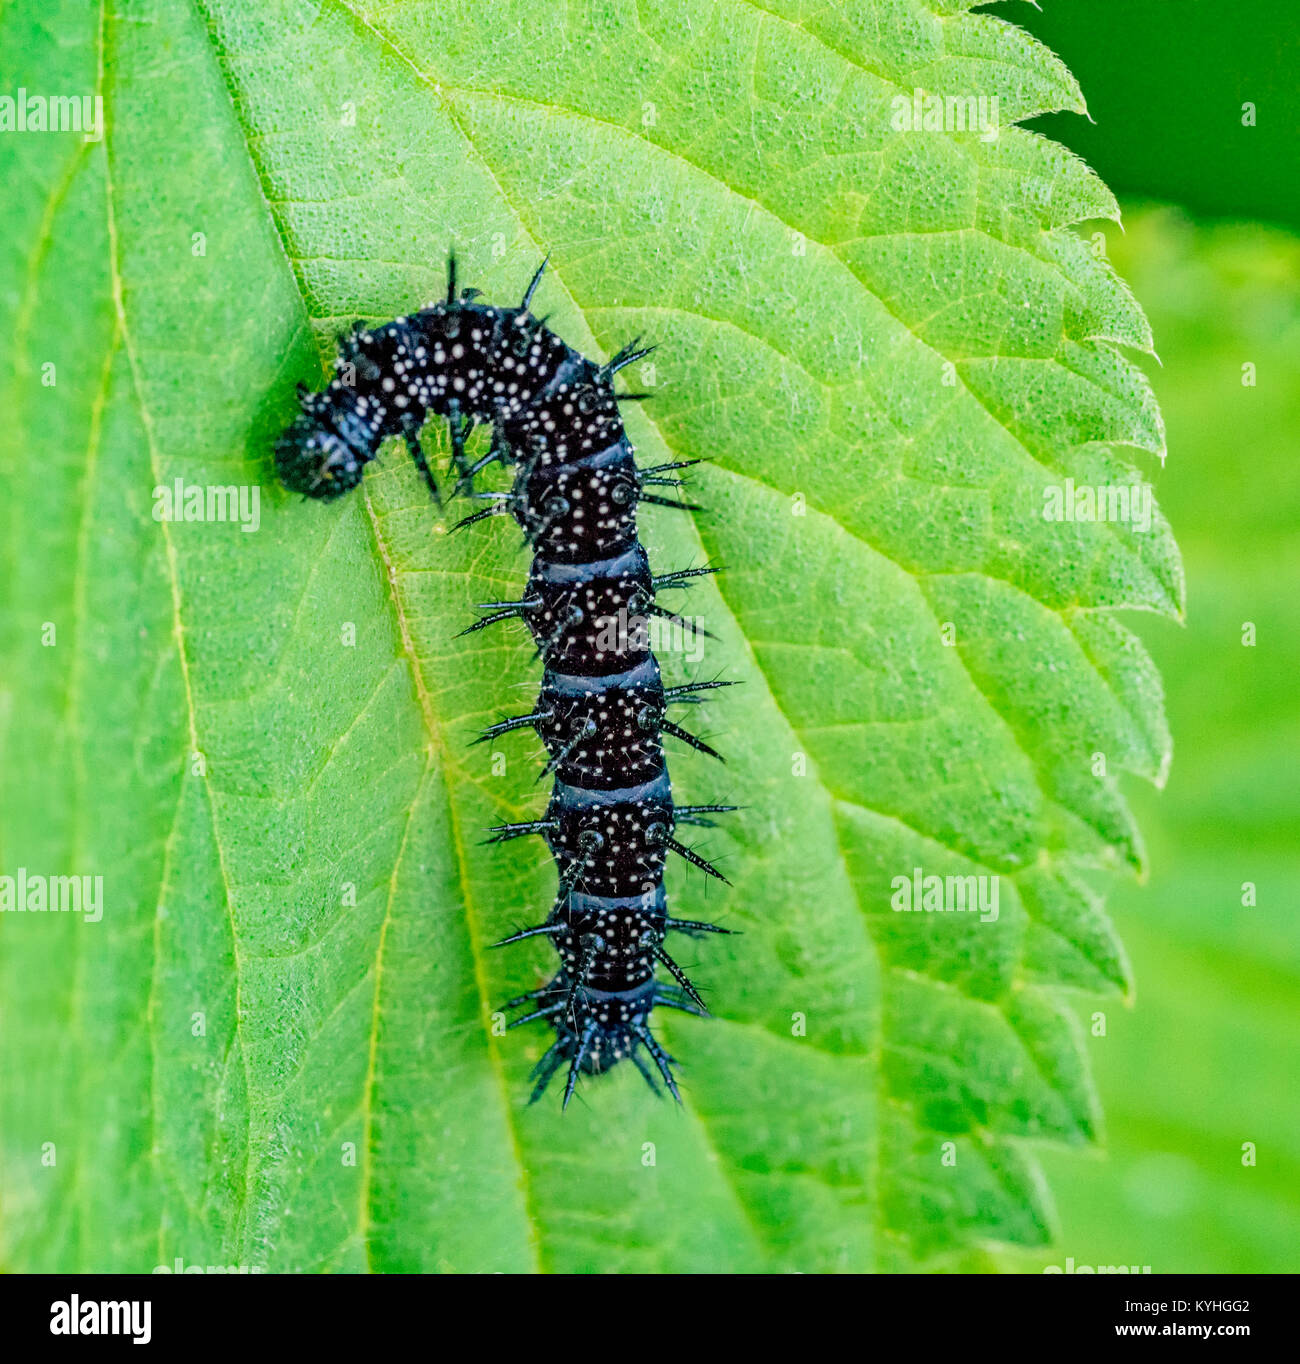 Caterpillar de un europeo mariposa pavo real en ambiente de ortiga verde Foto de stock